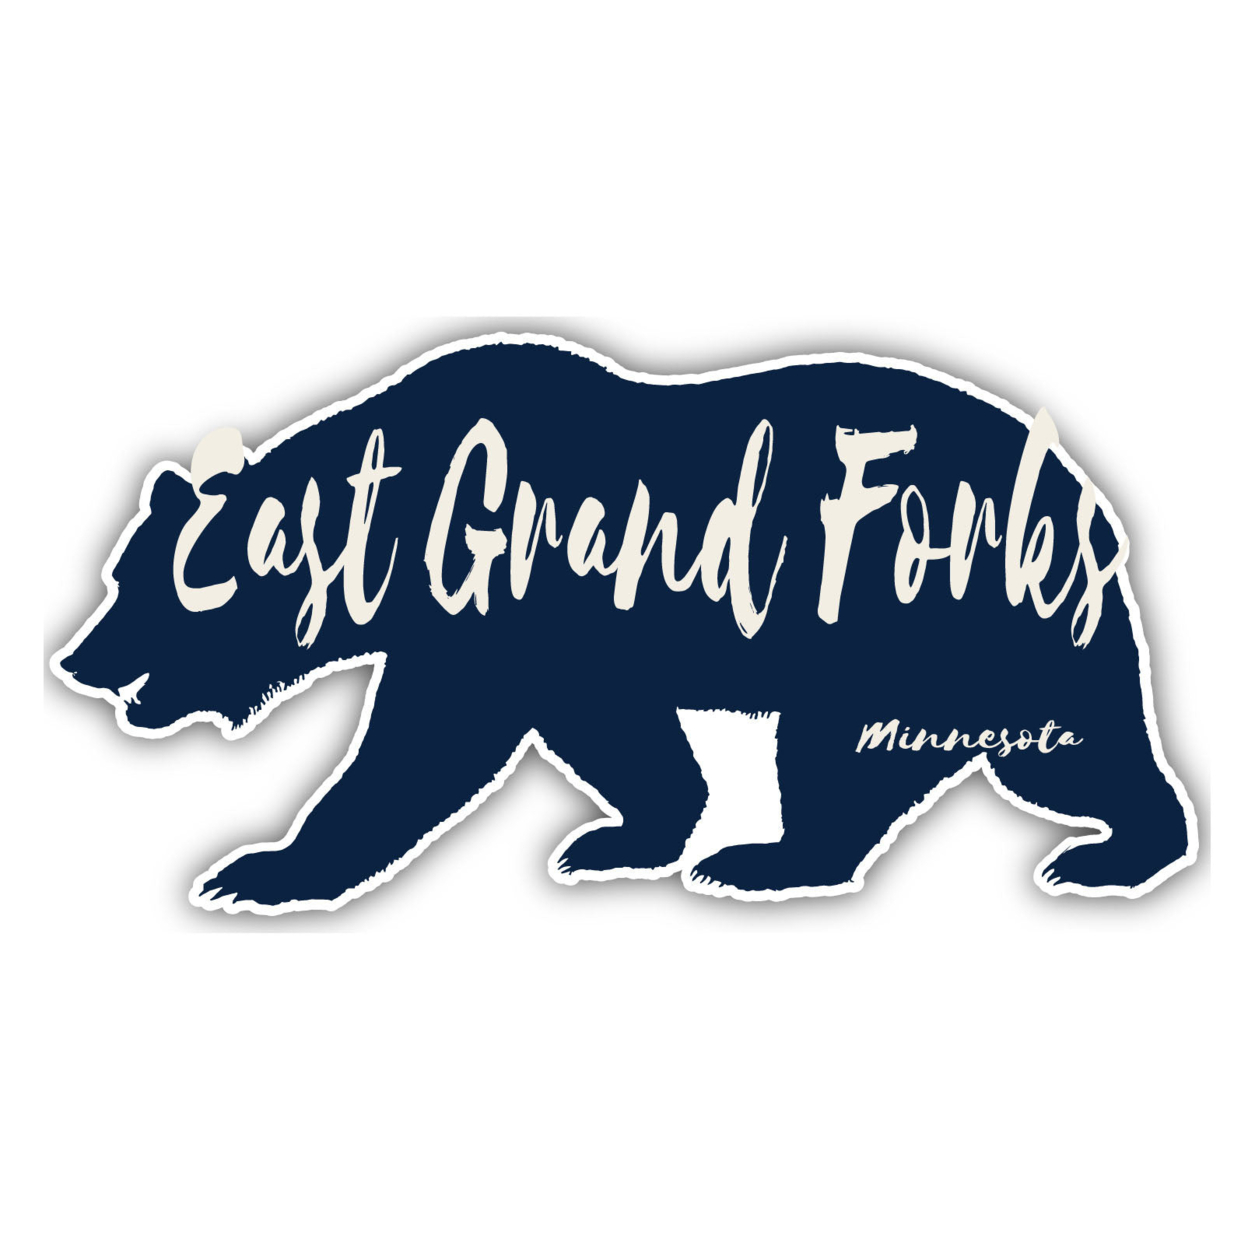 East Grand Forks Minnesota Souvenir Decorative Stickers (Choose Theme And Size) - Single Unit, 4-Inch, Bear